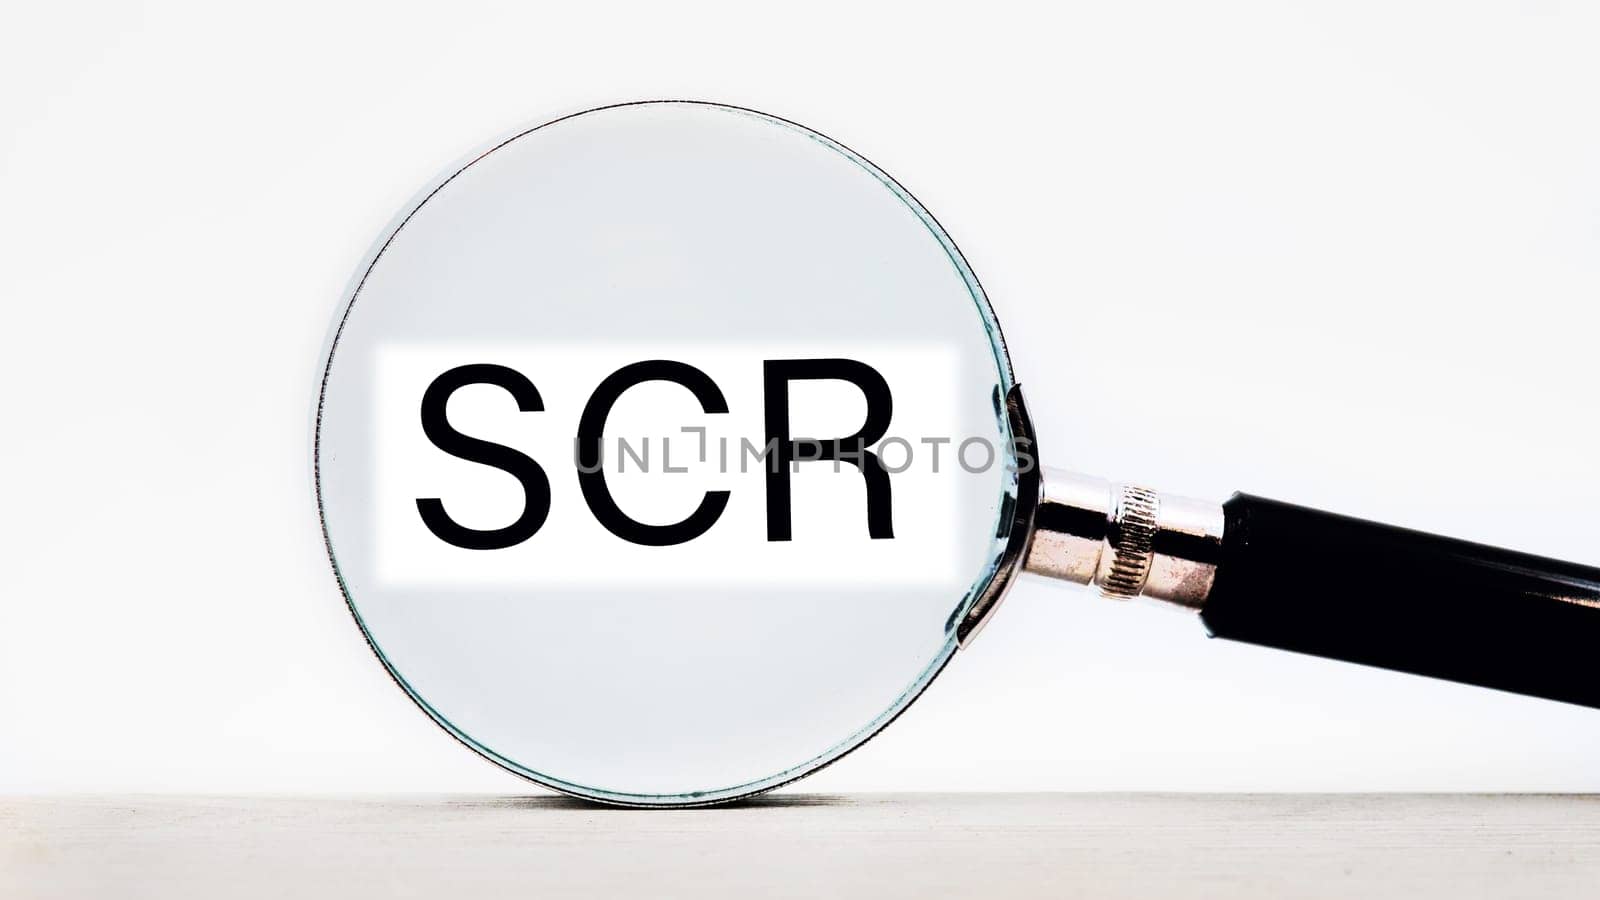 scr letter original monogram logo design